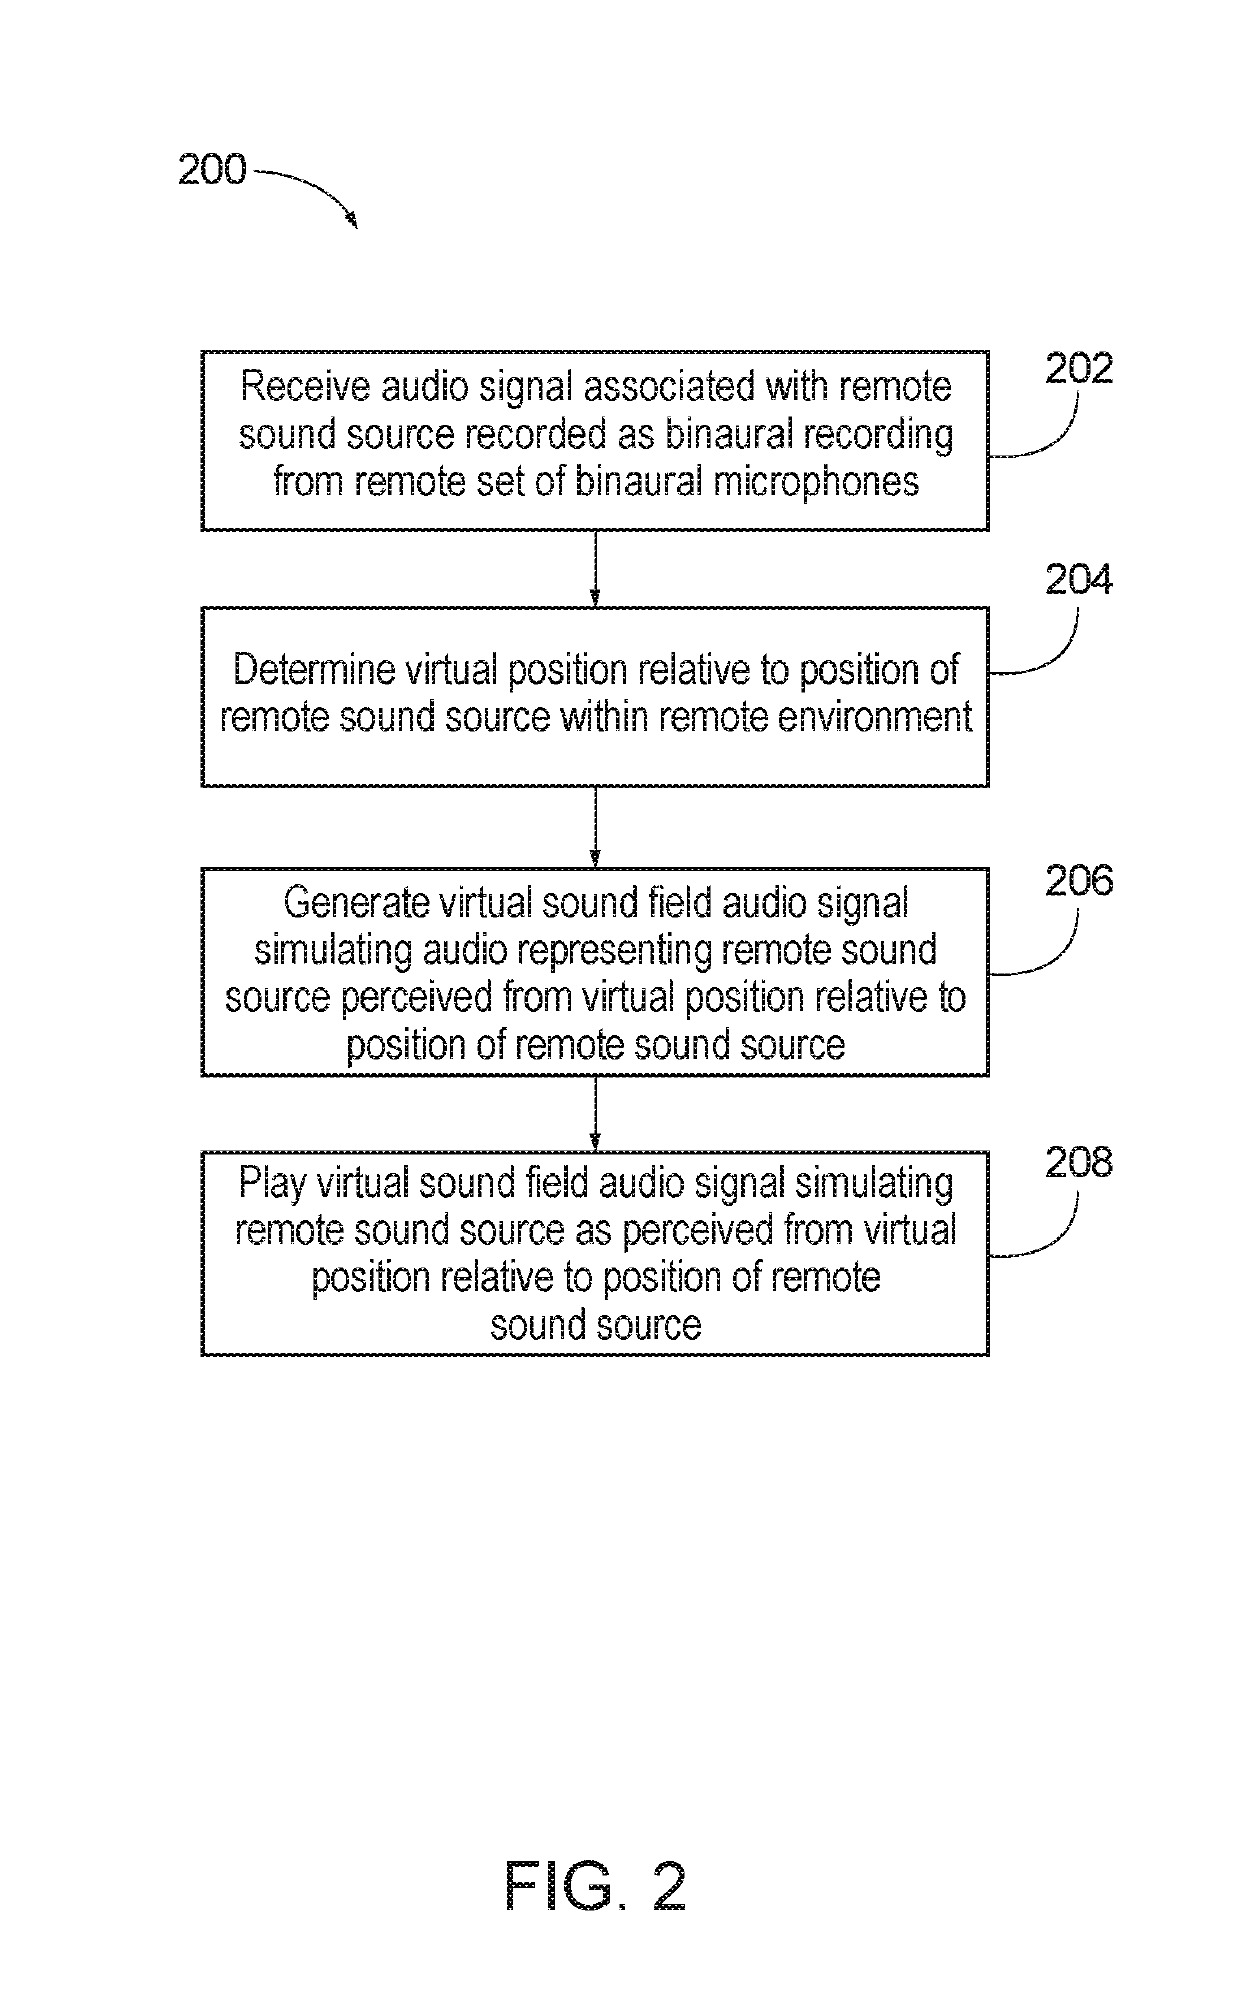 Virtual sound field